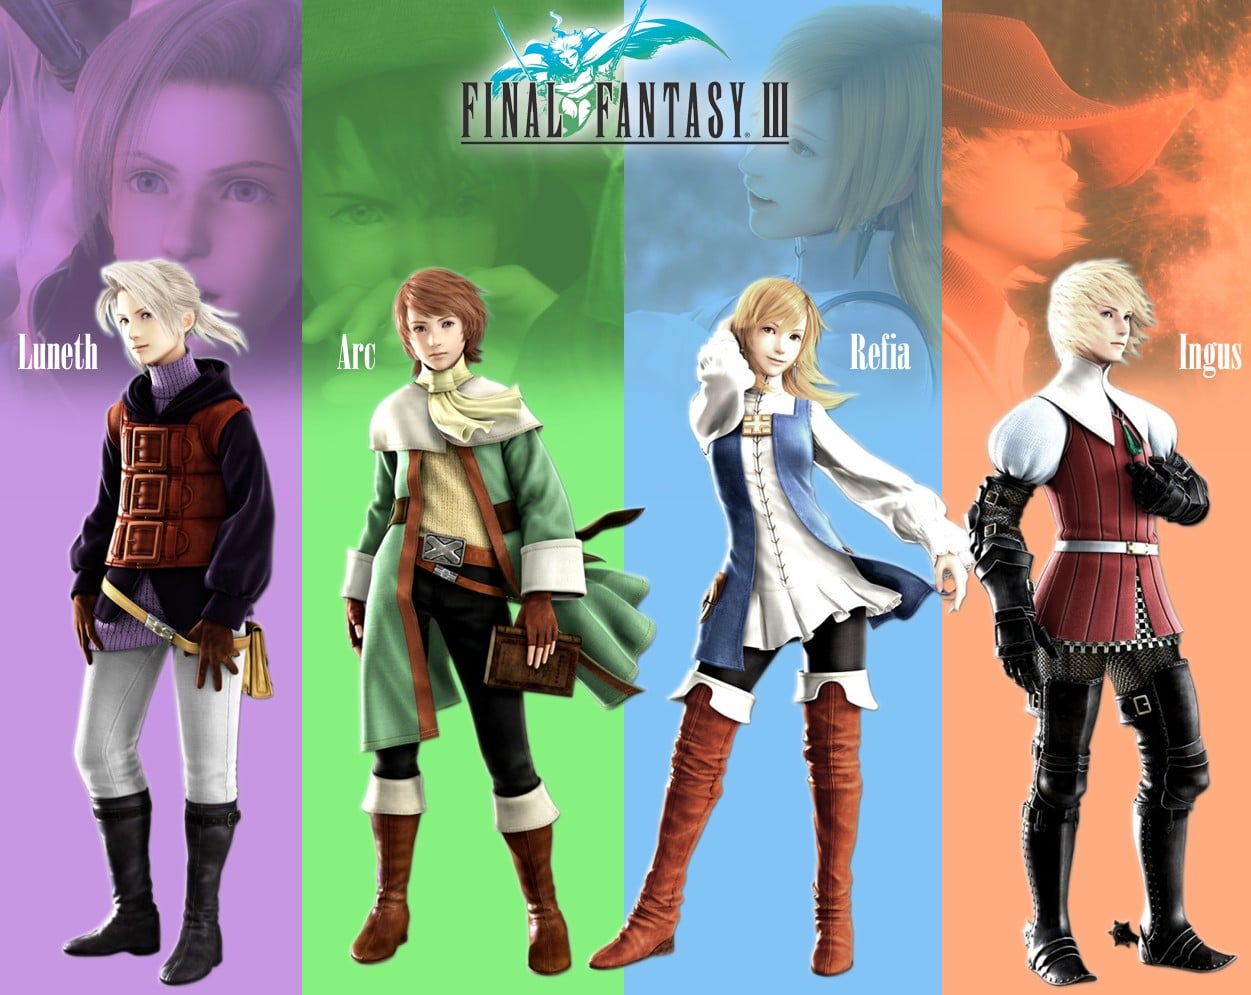 More information about "Final Fantasy III Retrospective"